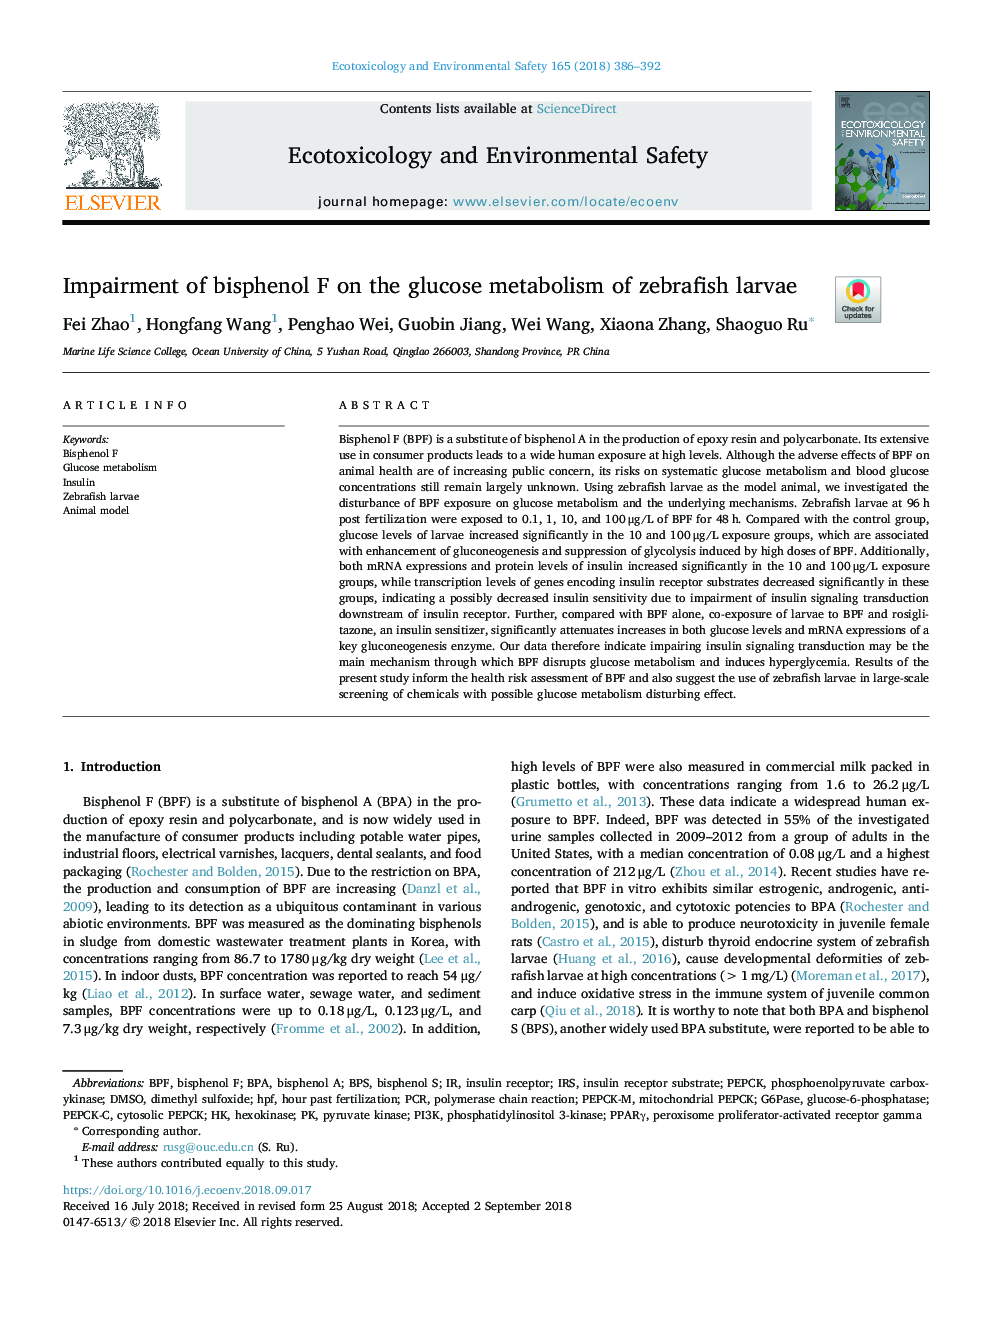 Impairment of bisphenol F on the glucose metabolism of zebrafish larvae